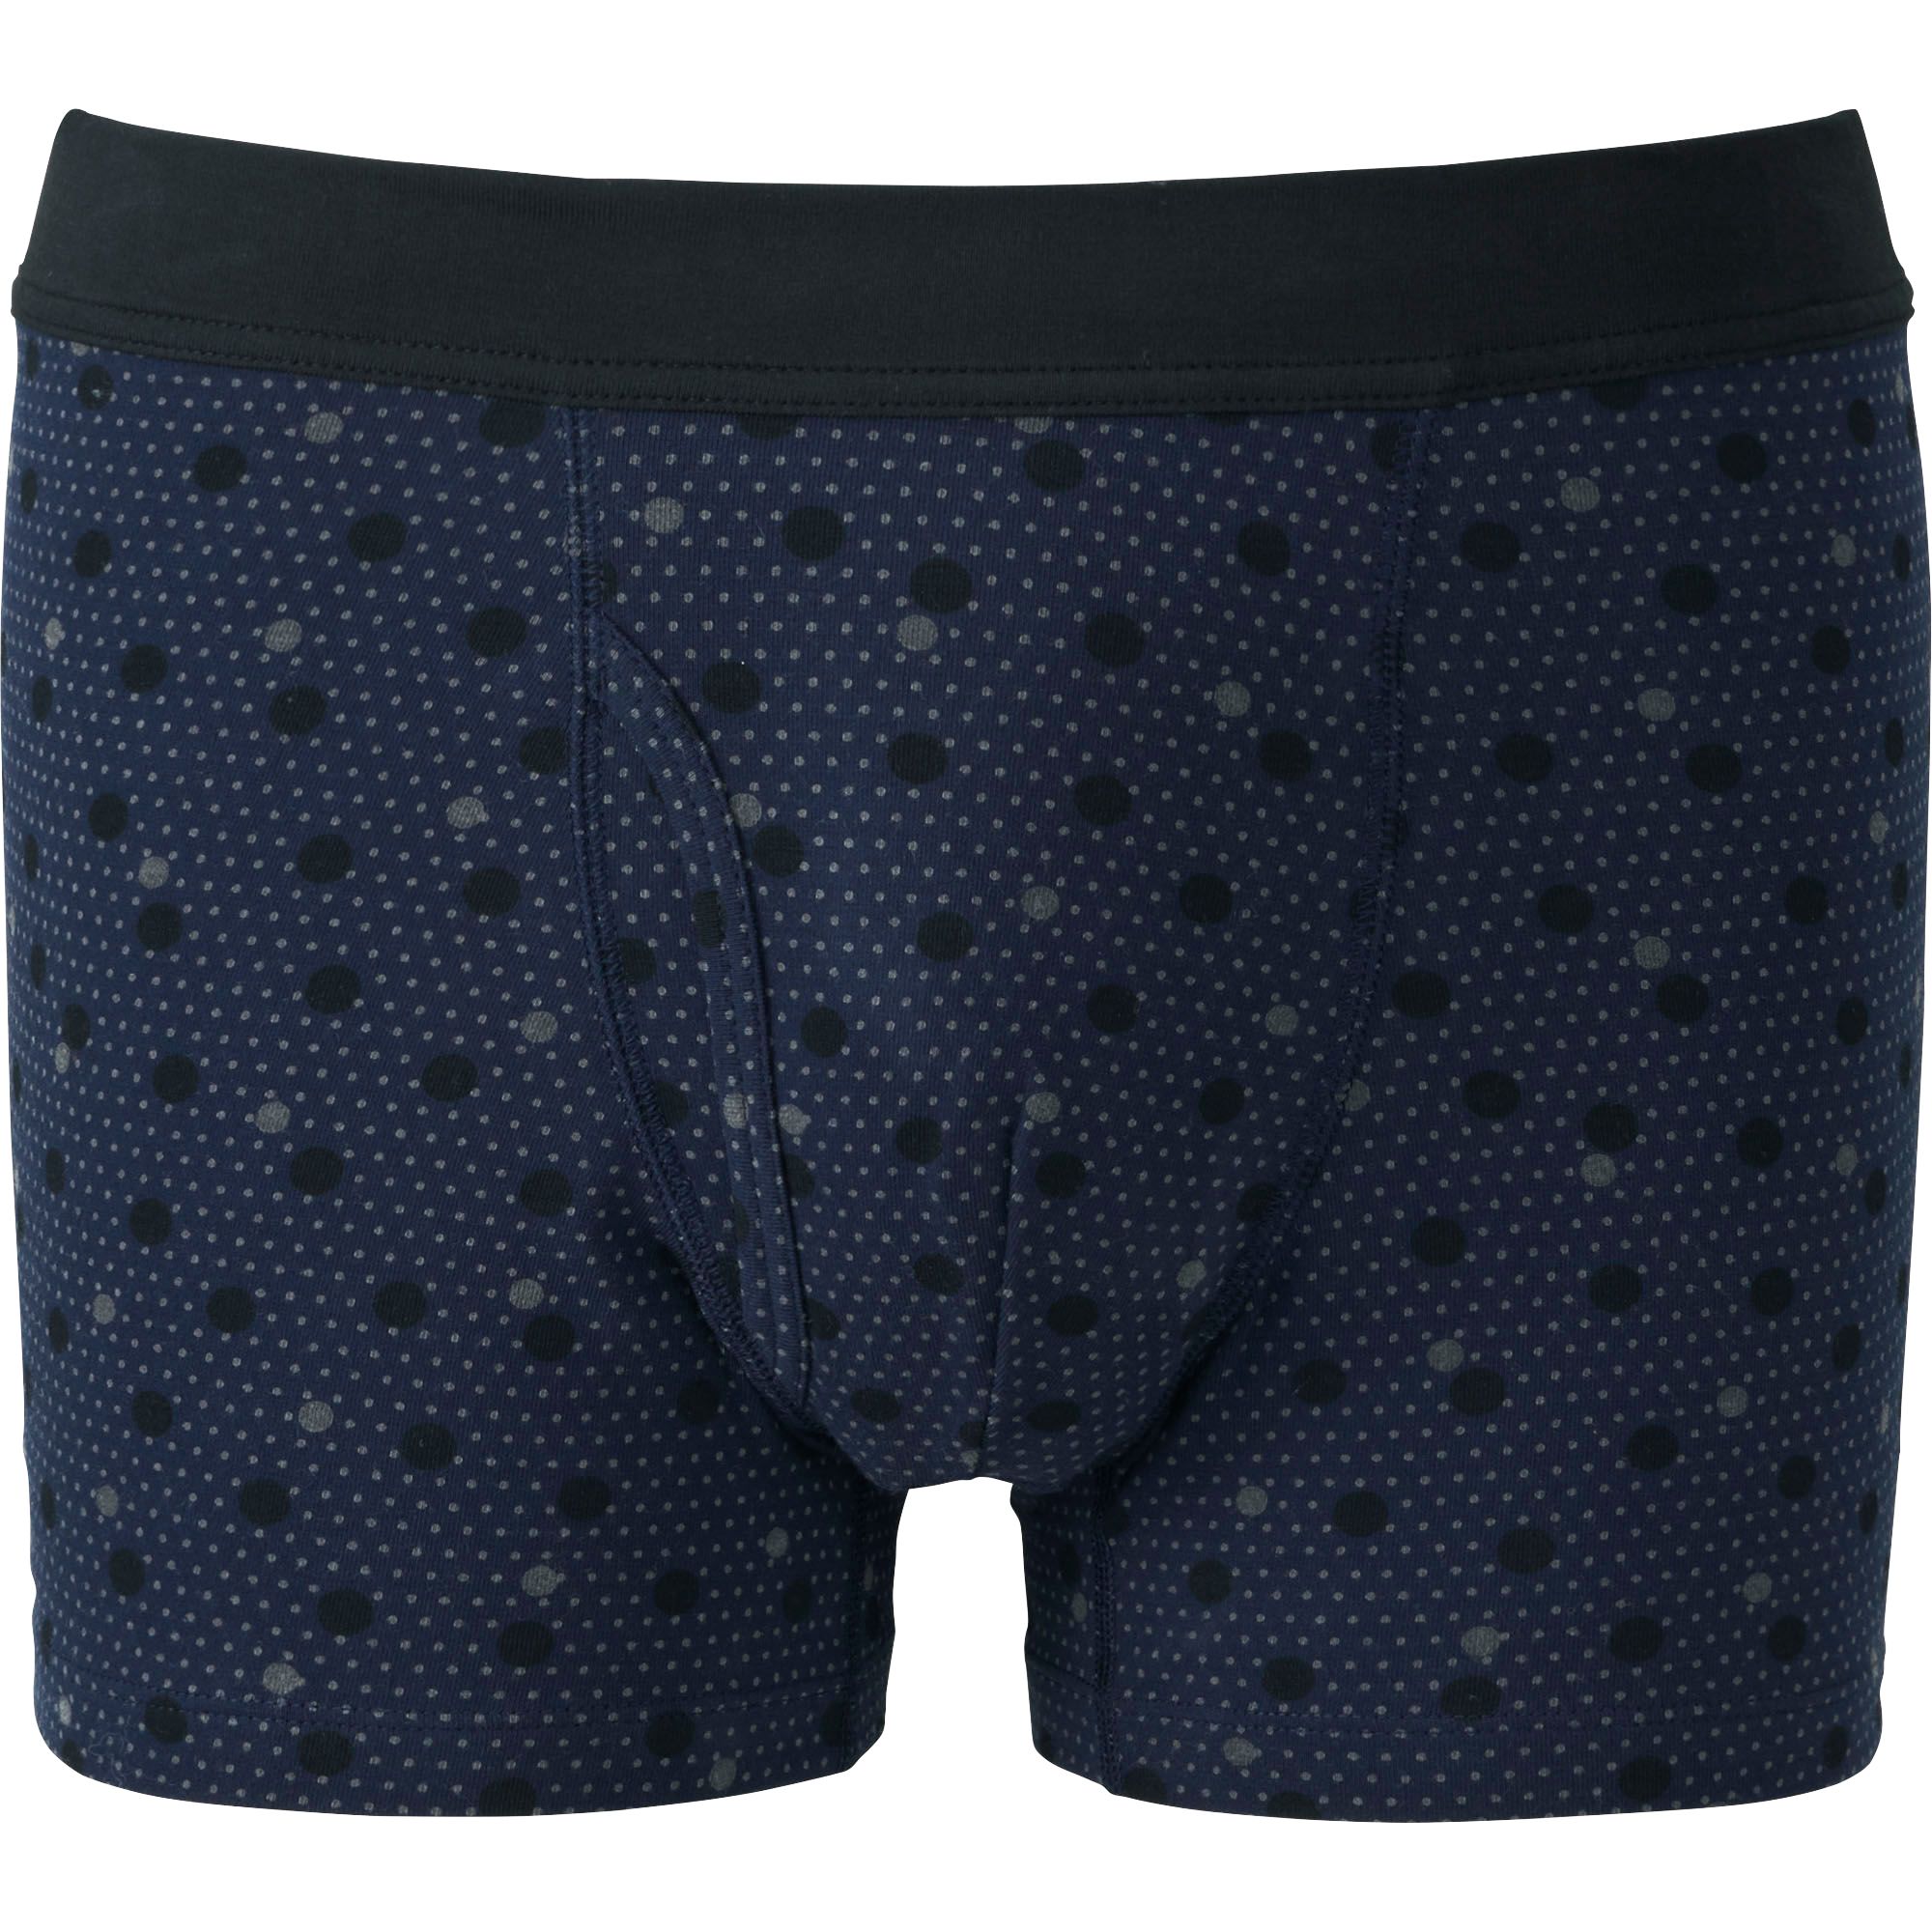 Men's Underwear, Briefs, Trunks & Boxers | UNIQLO